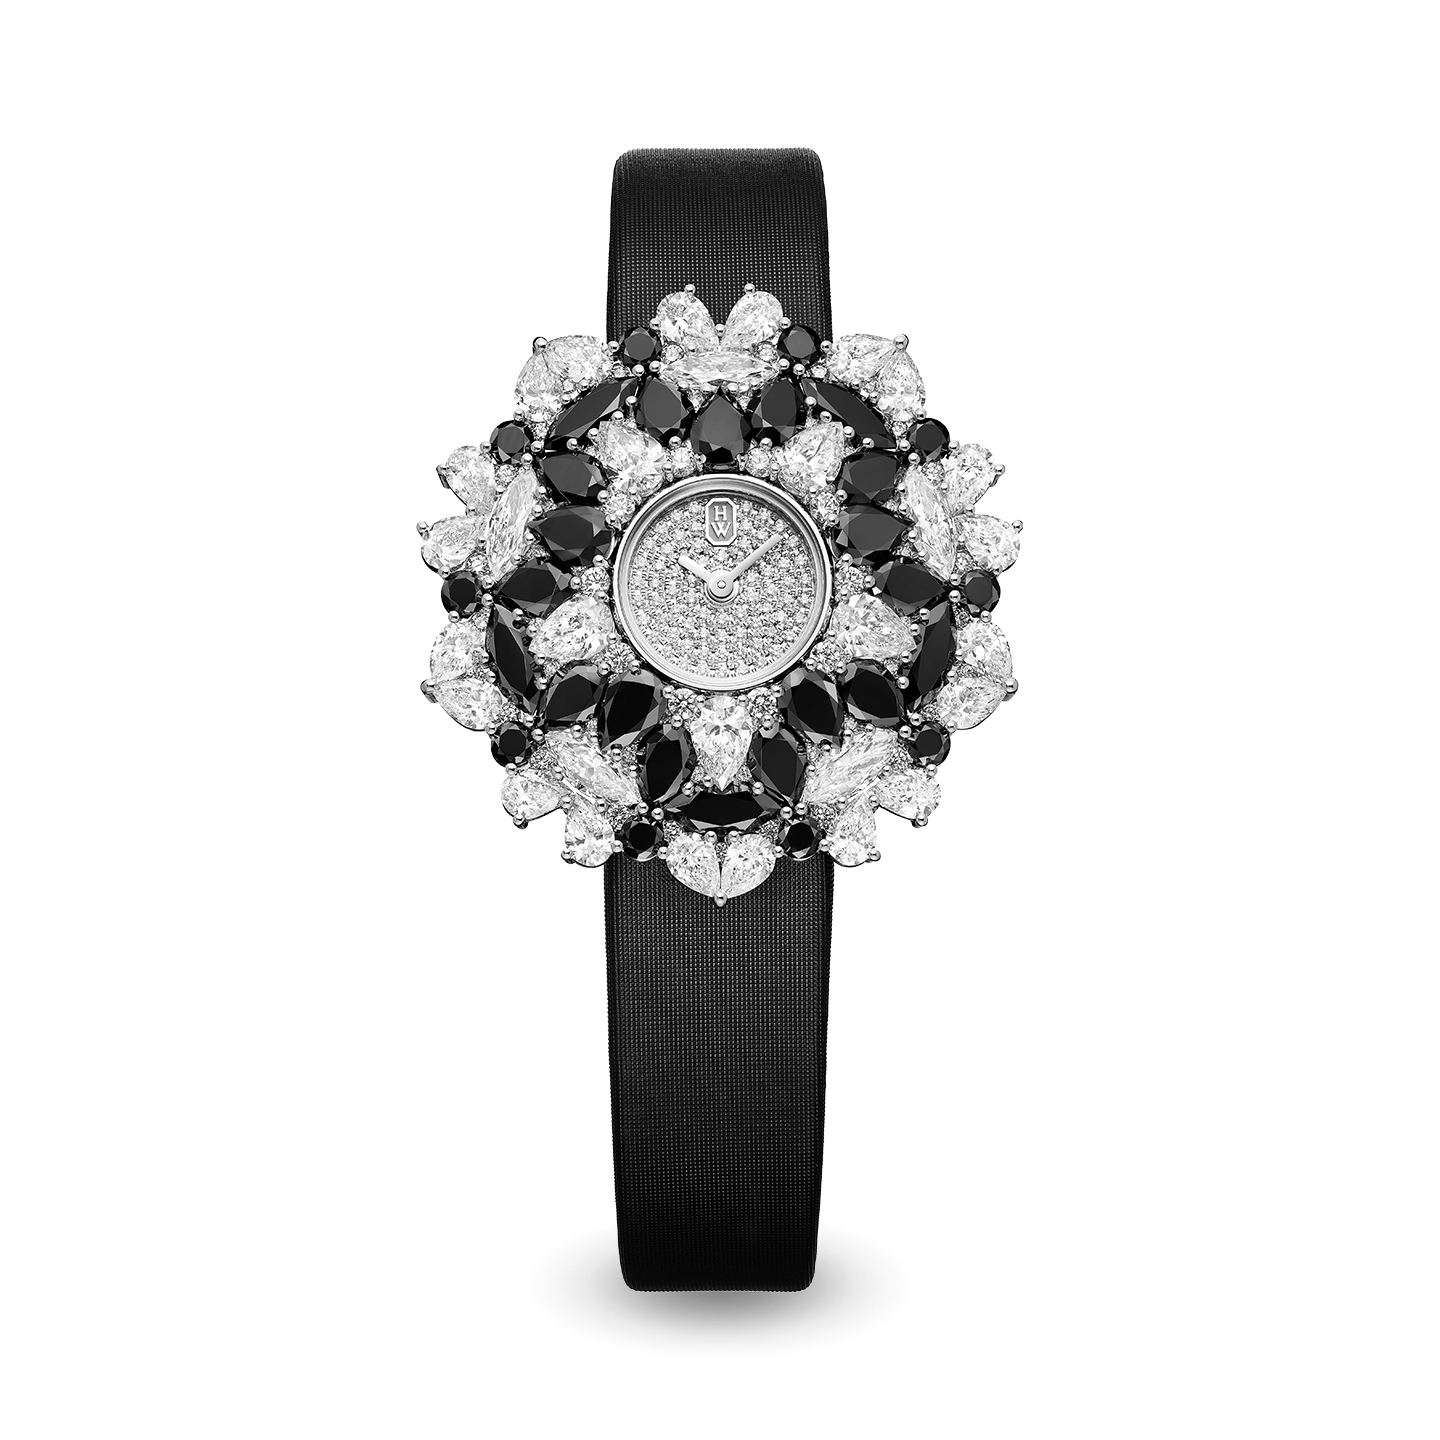 Winston Kaleidoscope High Jewelry Watch Black & White by Harry 